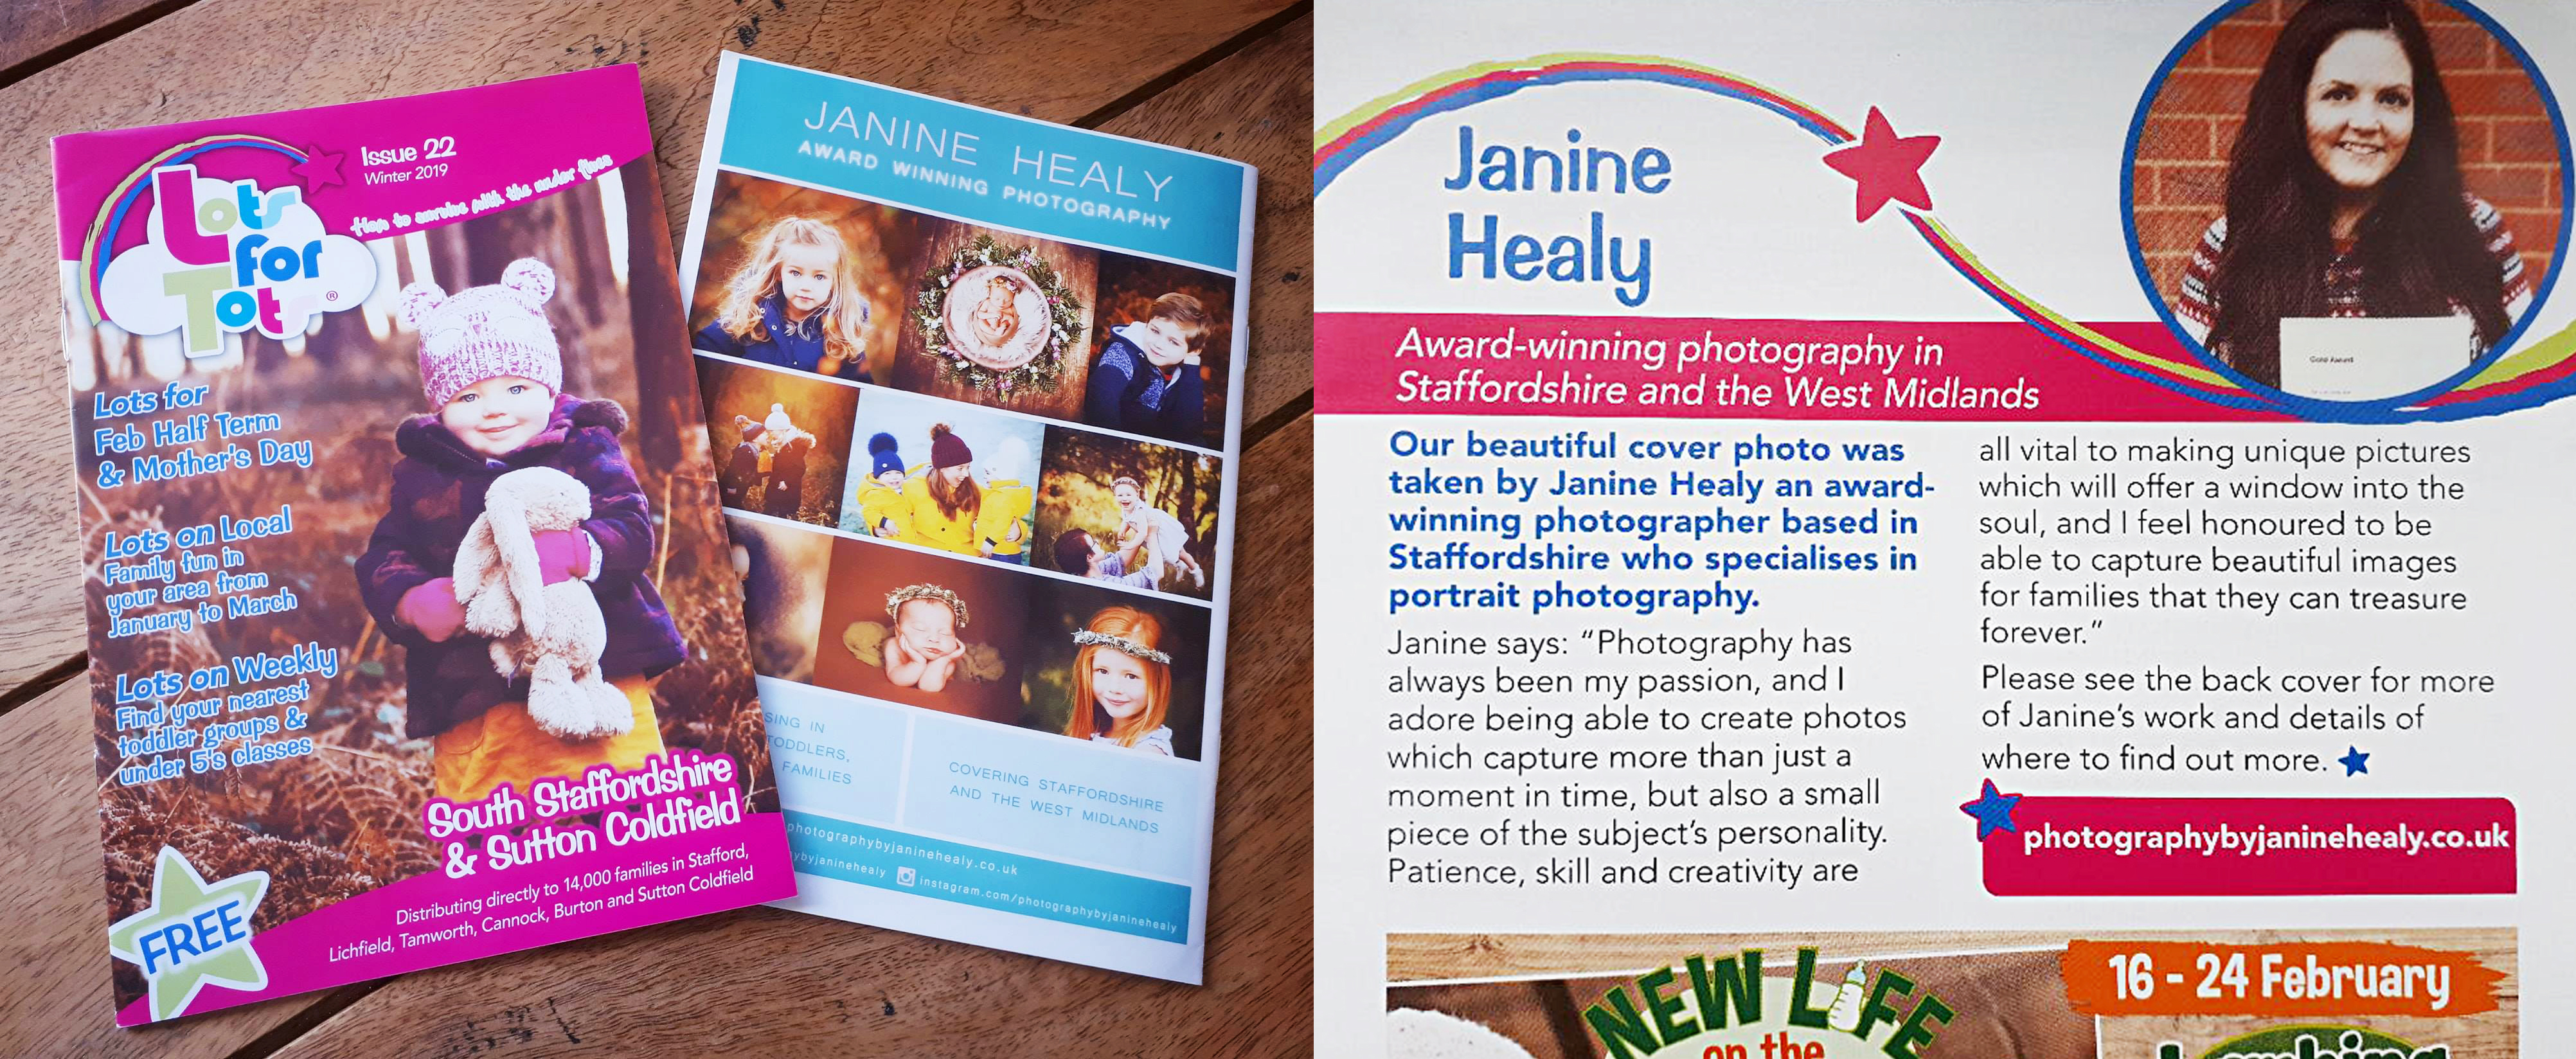 janine healy photography